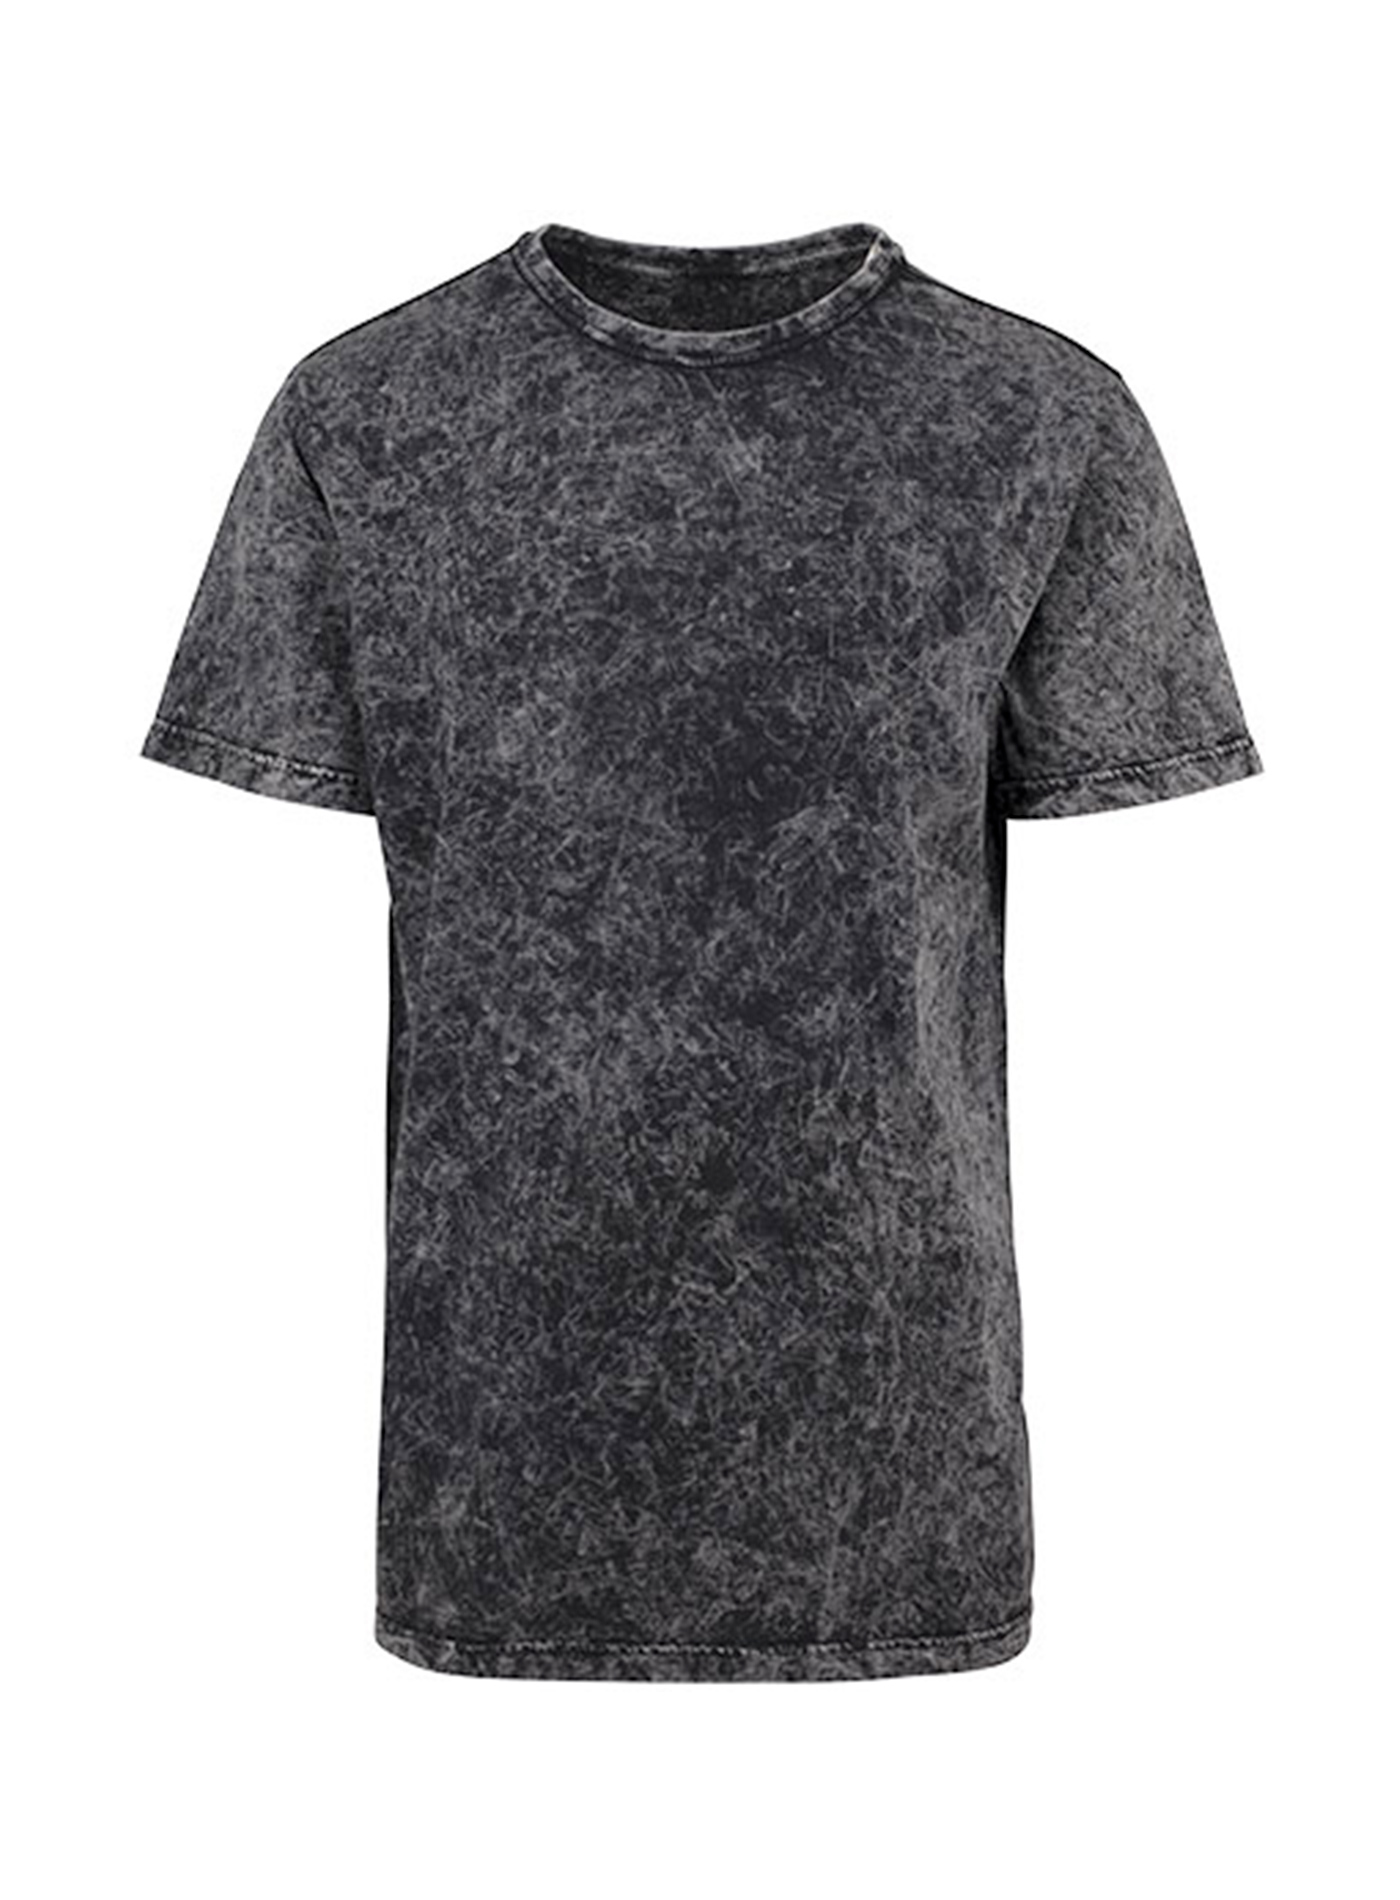 Pánské tričko Builted - Tmavě šedý melír XL